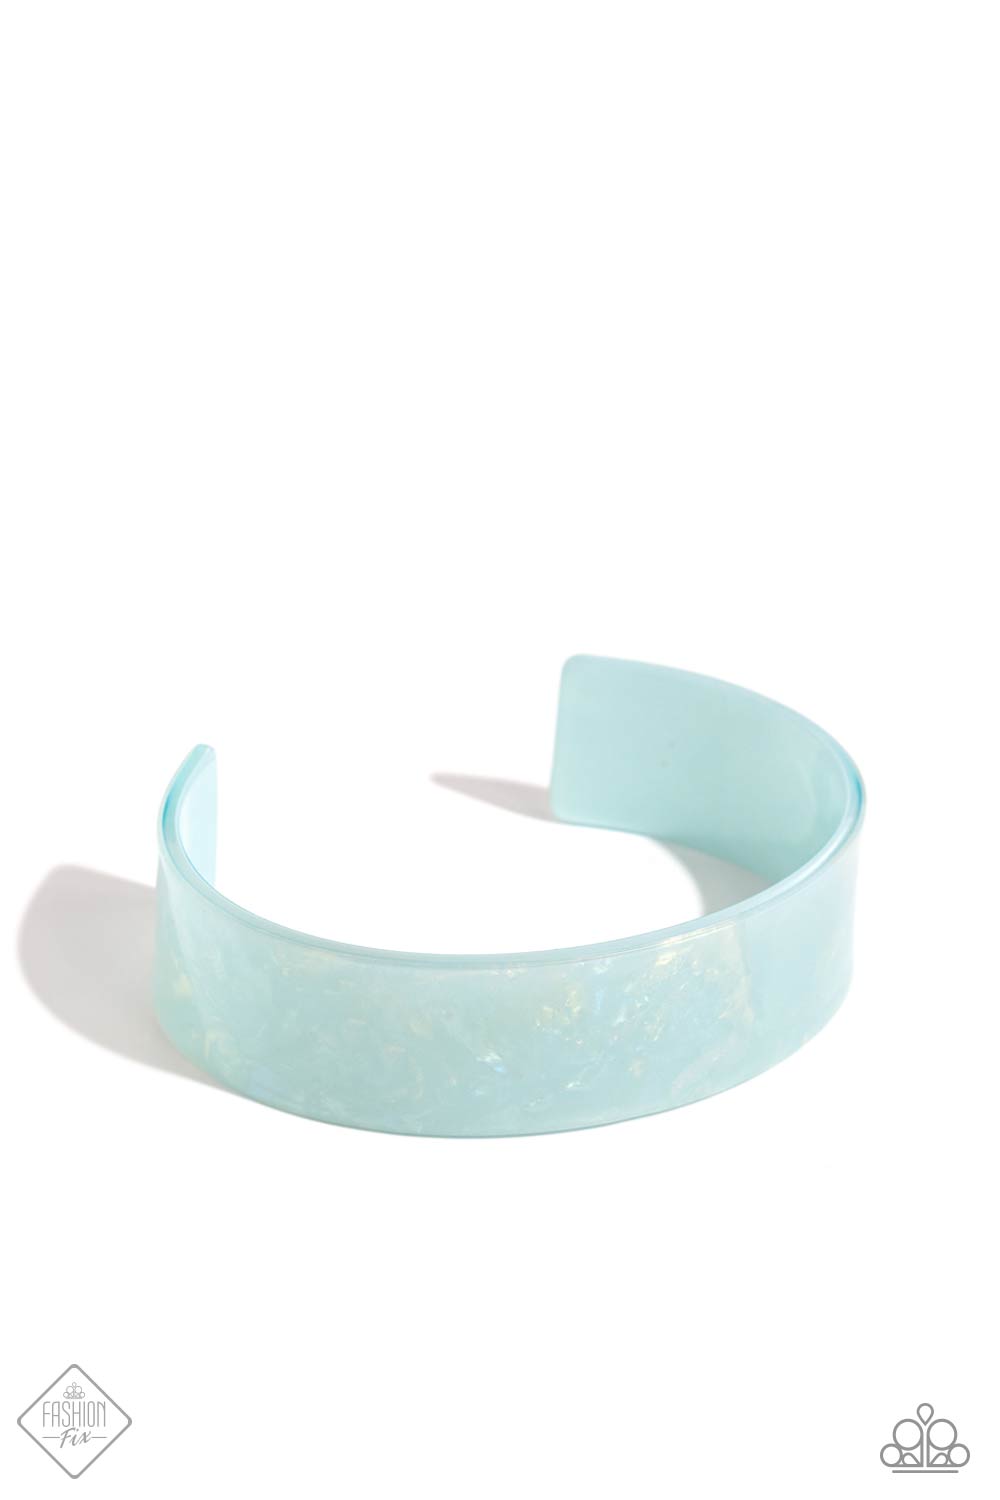 Pastel Pairing Bracelet (Blue, White)